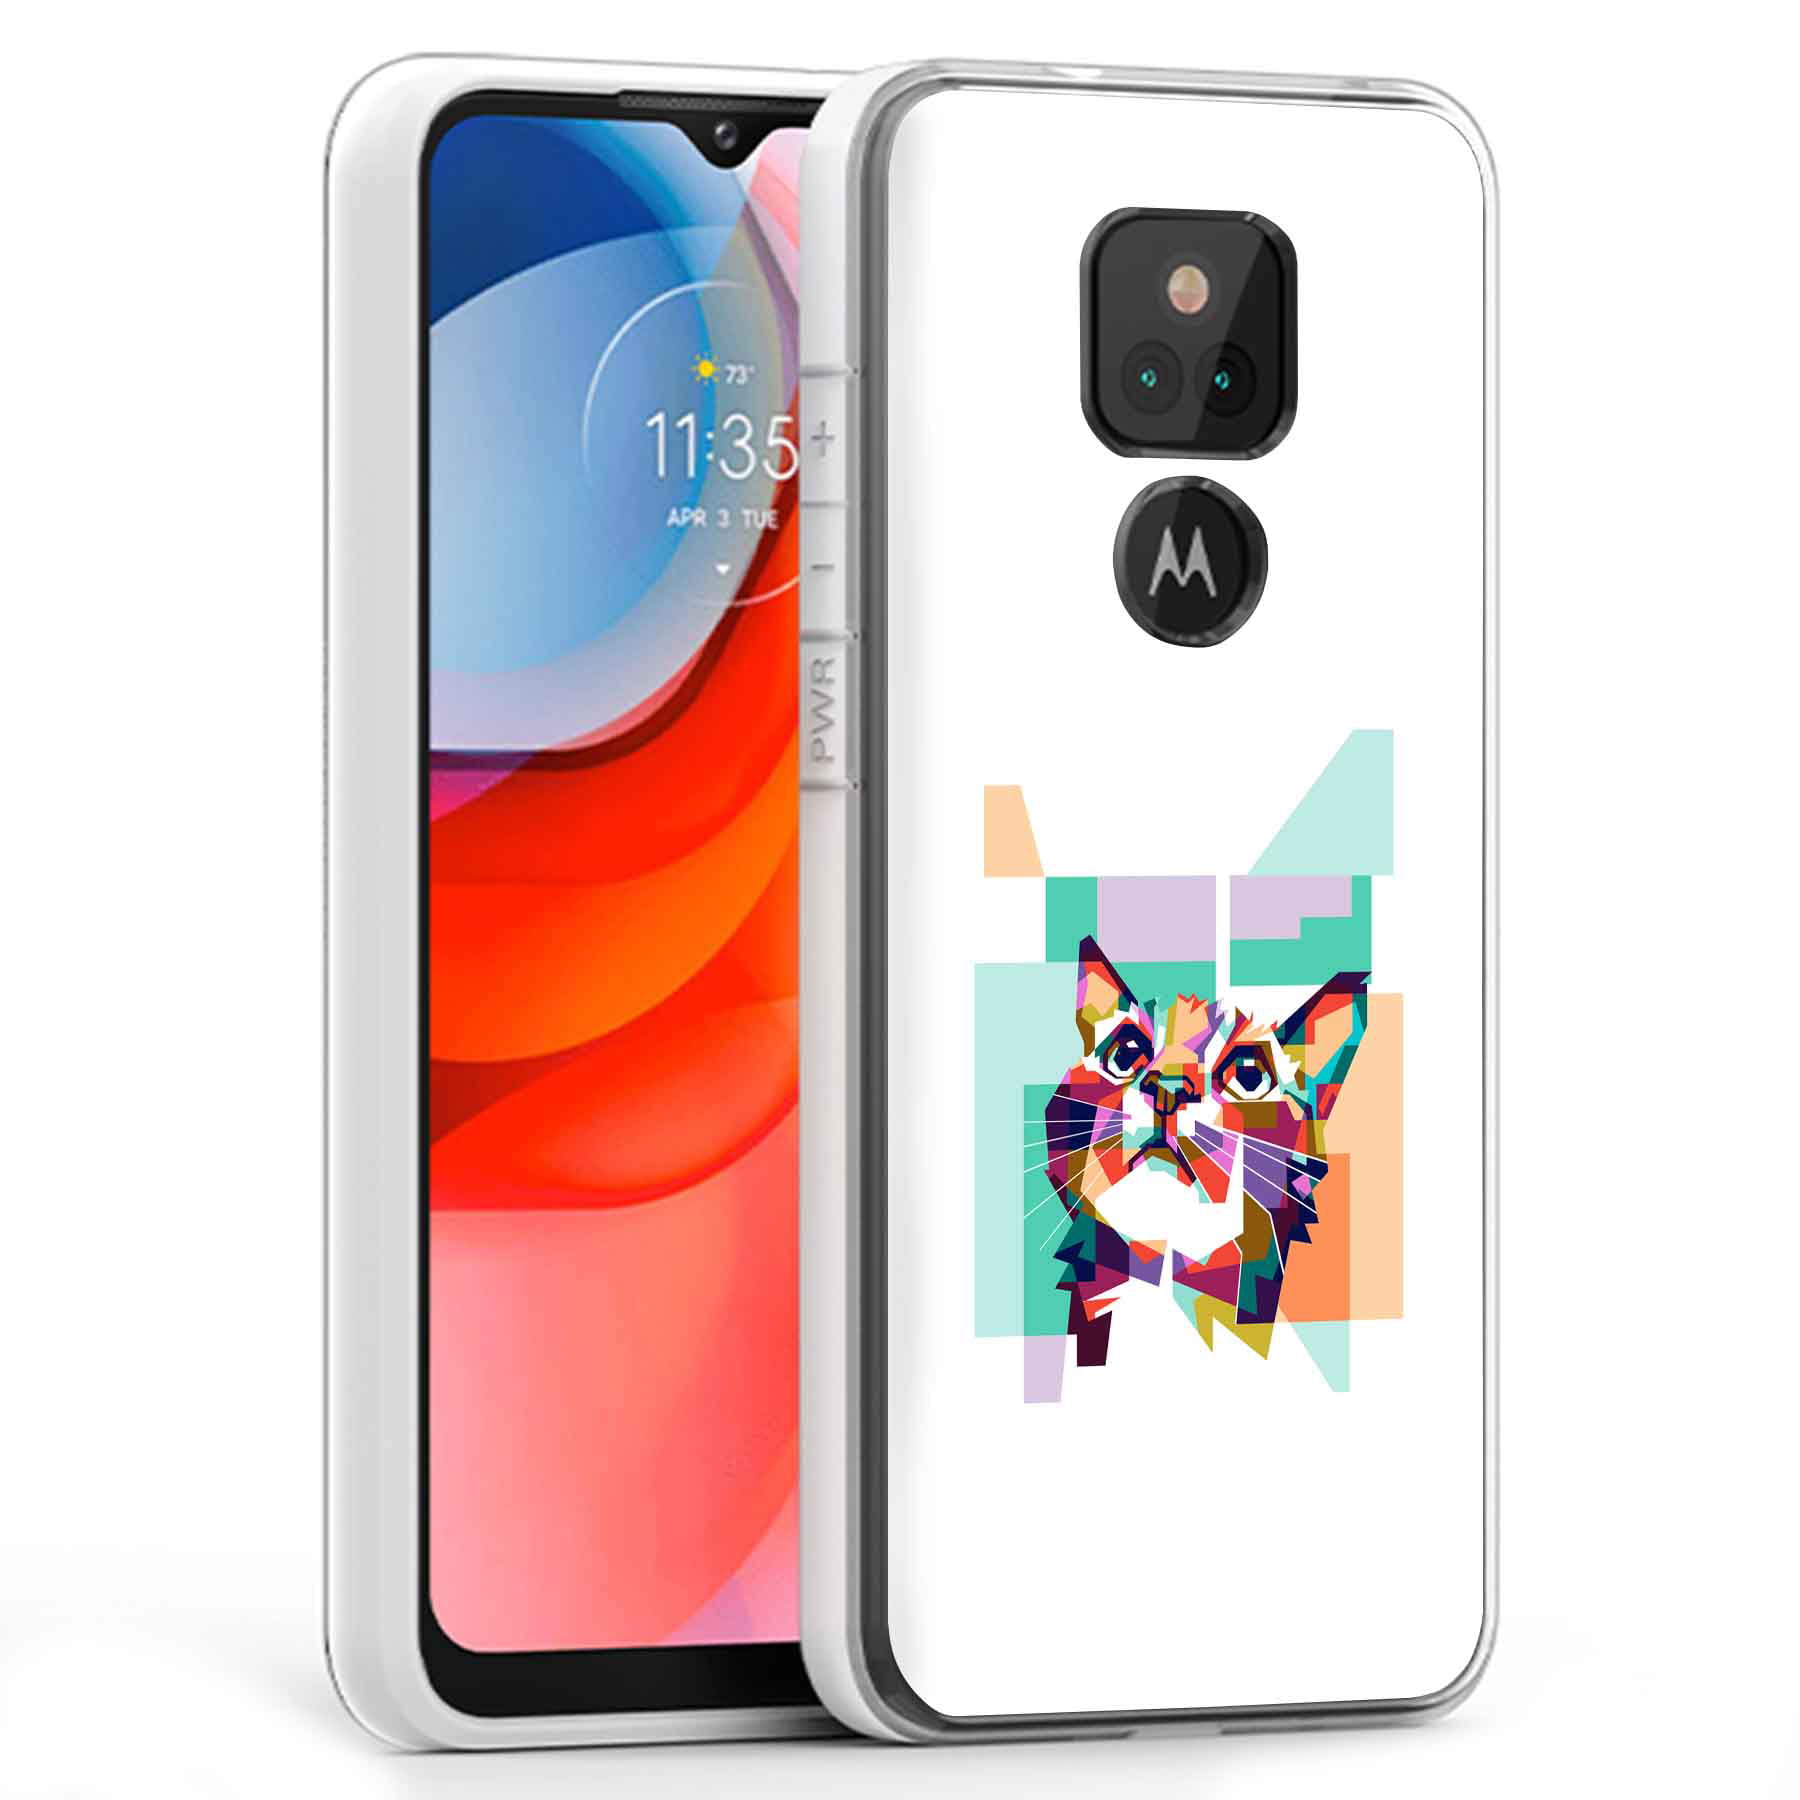 TalkingCase Slim Phone Case Cover Compatible for Motorola Moto G Play 2021,3D Cat Print,Lightweight, Flexible, Soft, USA